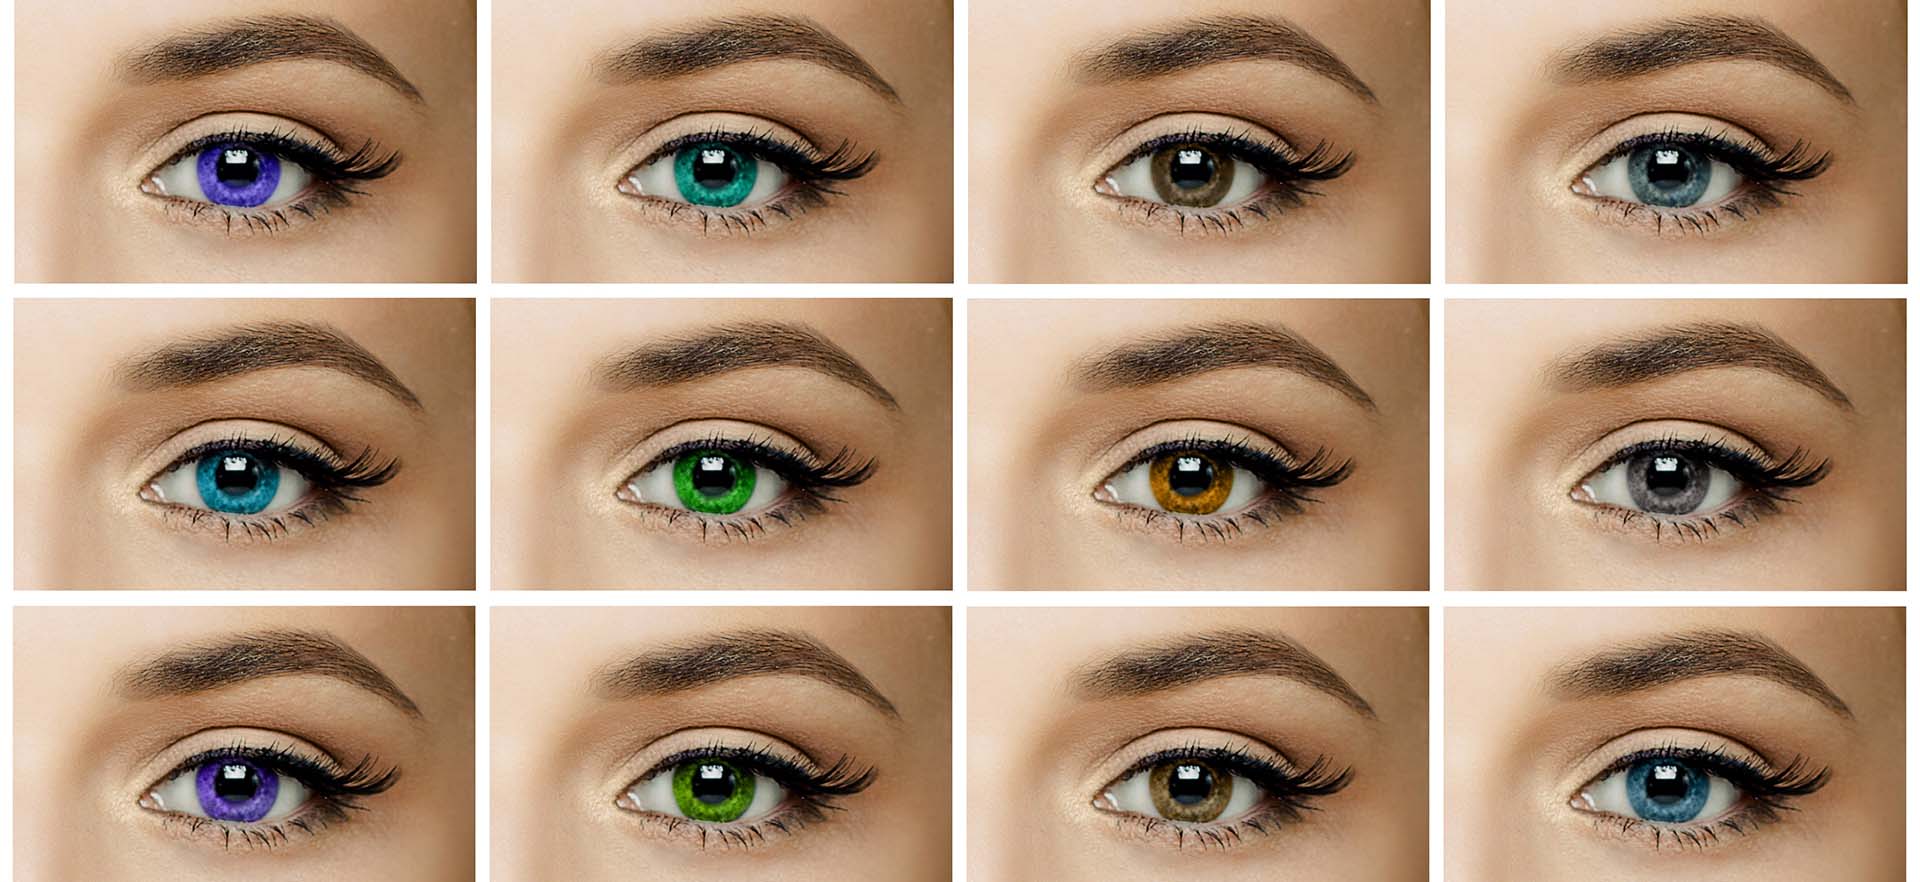 Color-tint contact lenses